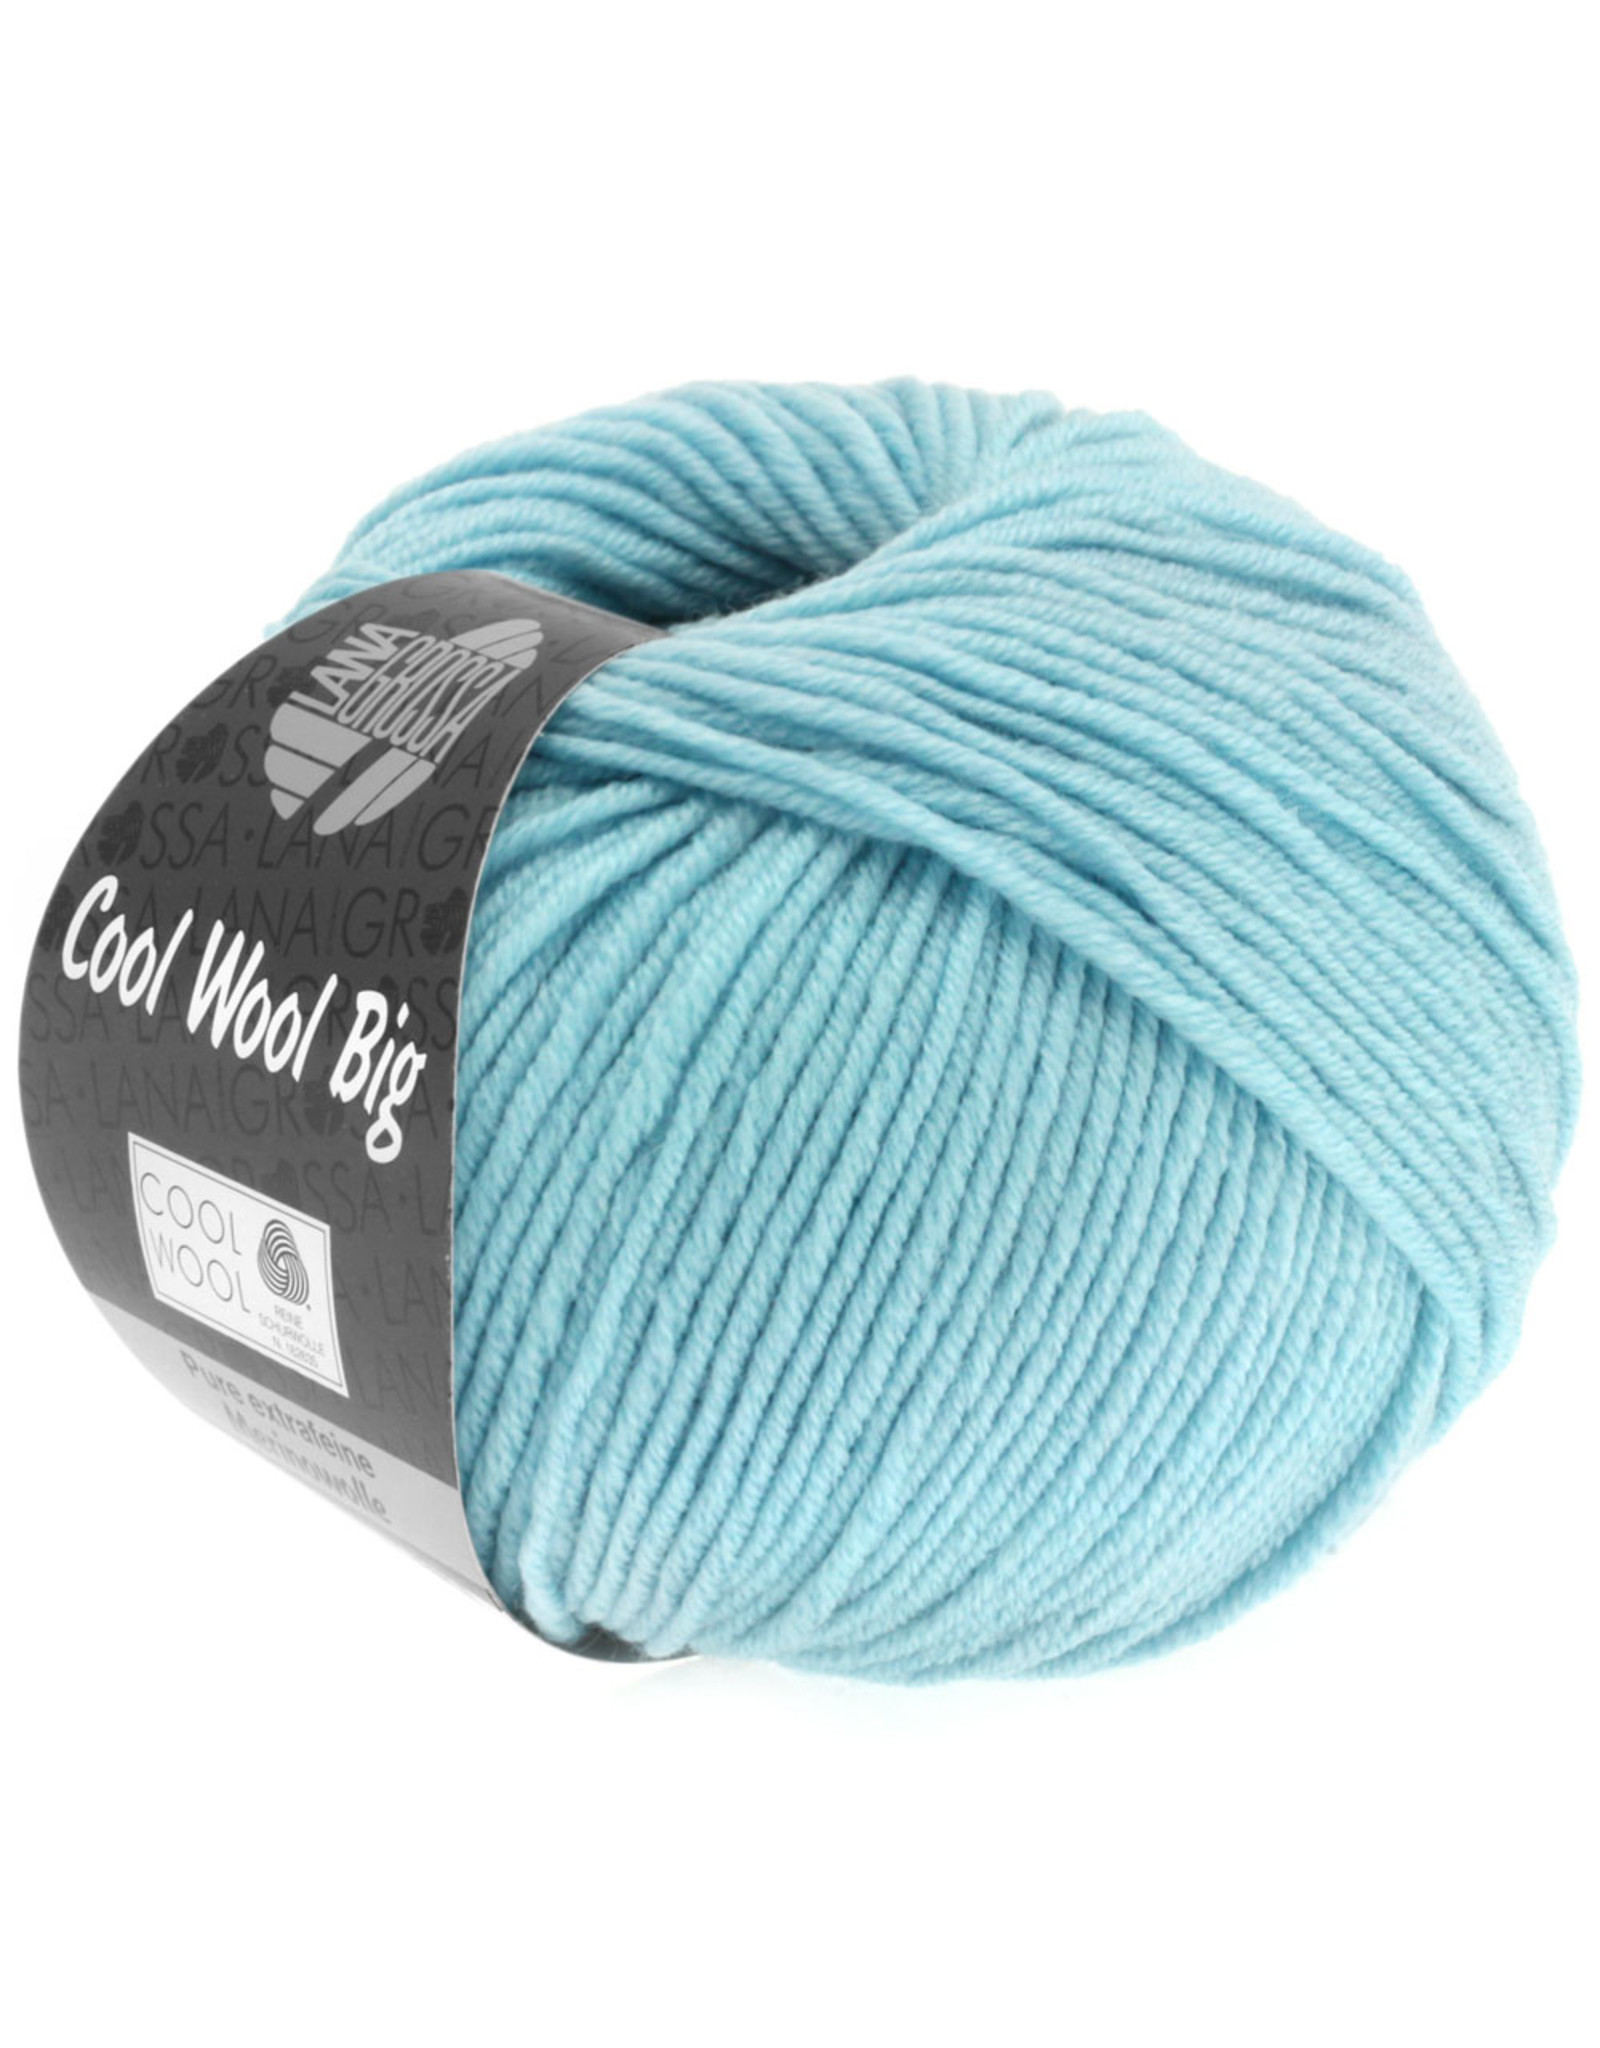 Lana Grossa Lana Grossa Cool wool big 946